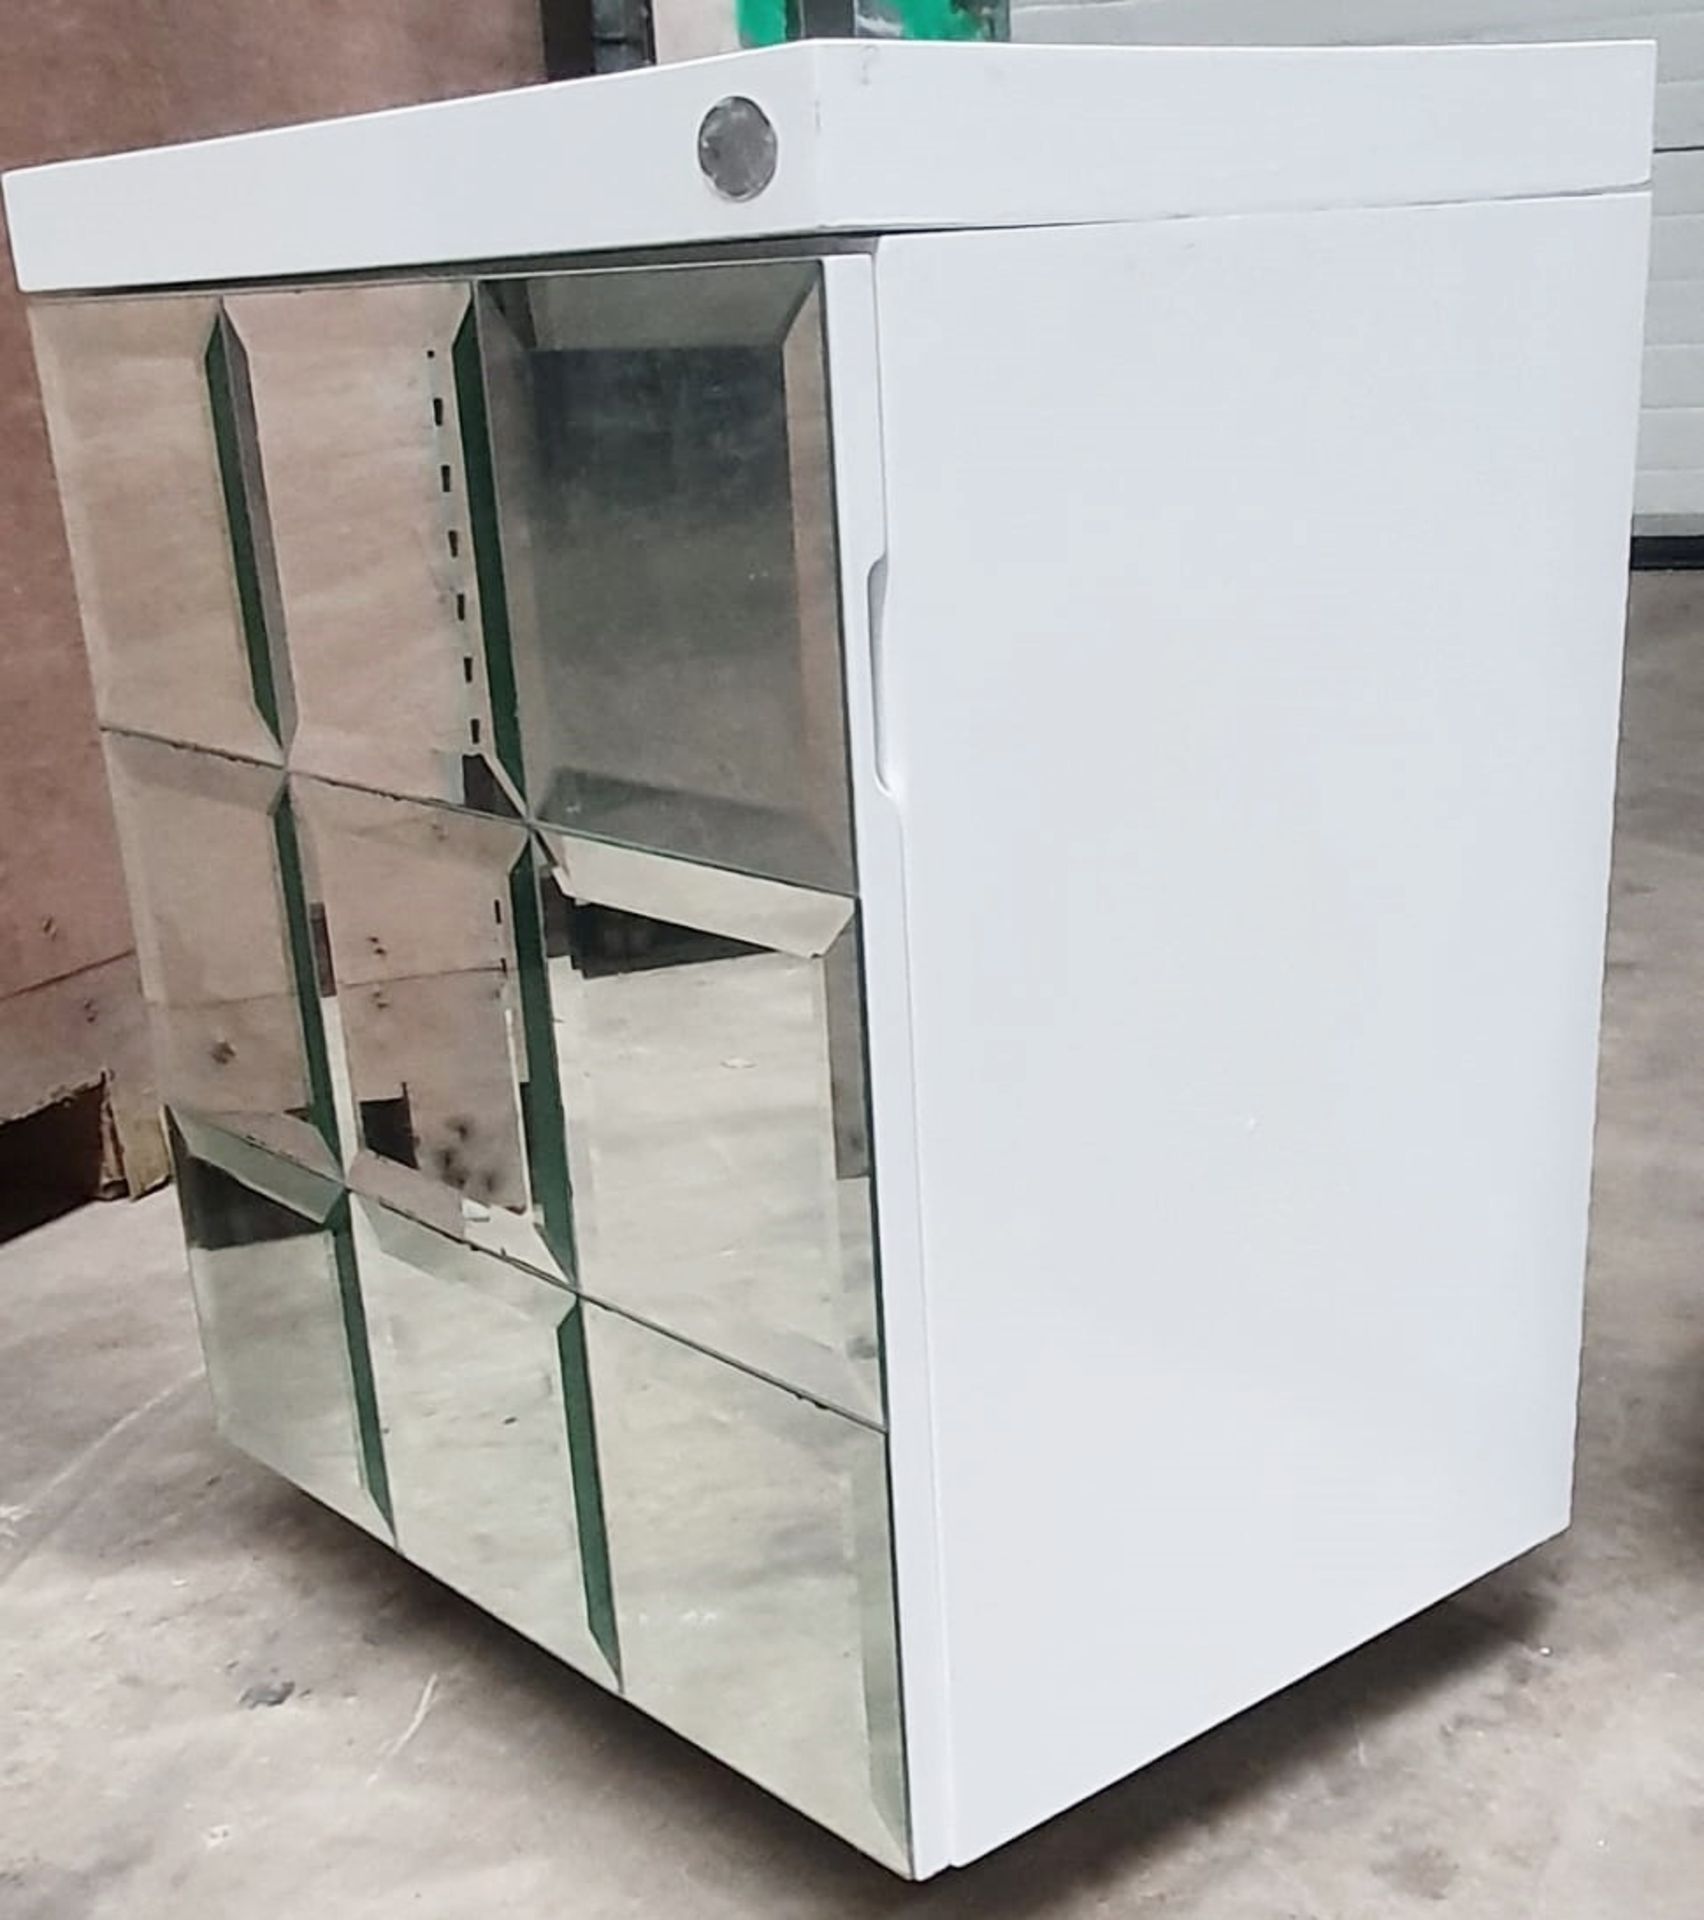 1 x GODI High-end Freestanding Mirrored 1-Door Bathroom Unit, In White - Unused Boxed Stock - Image 4 of 6